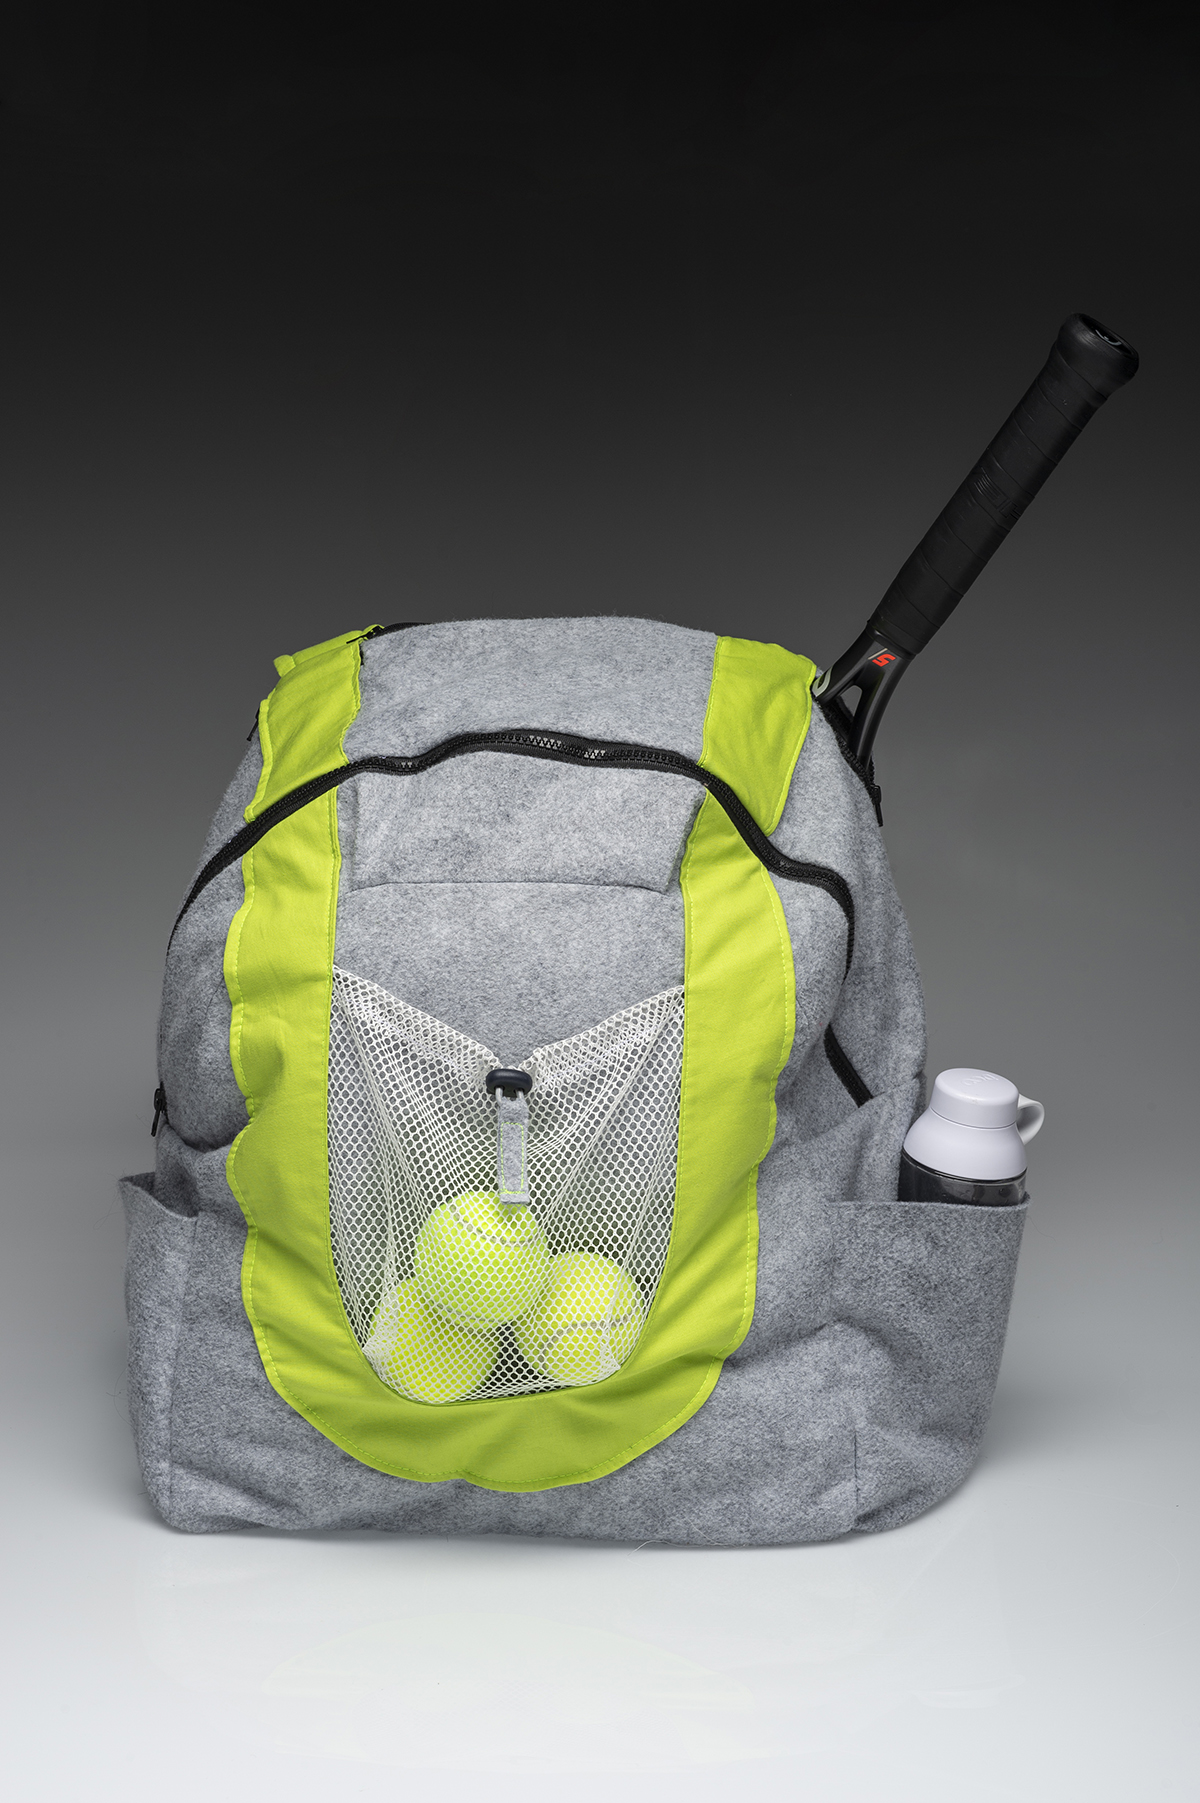 A textile design of a tennis equipment bag.